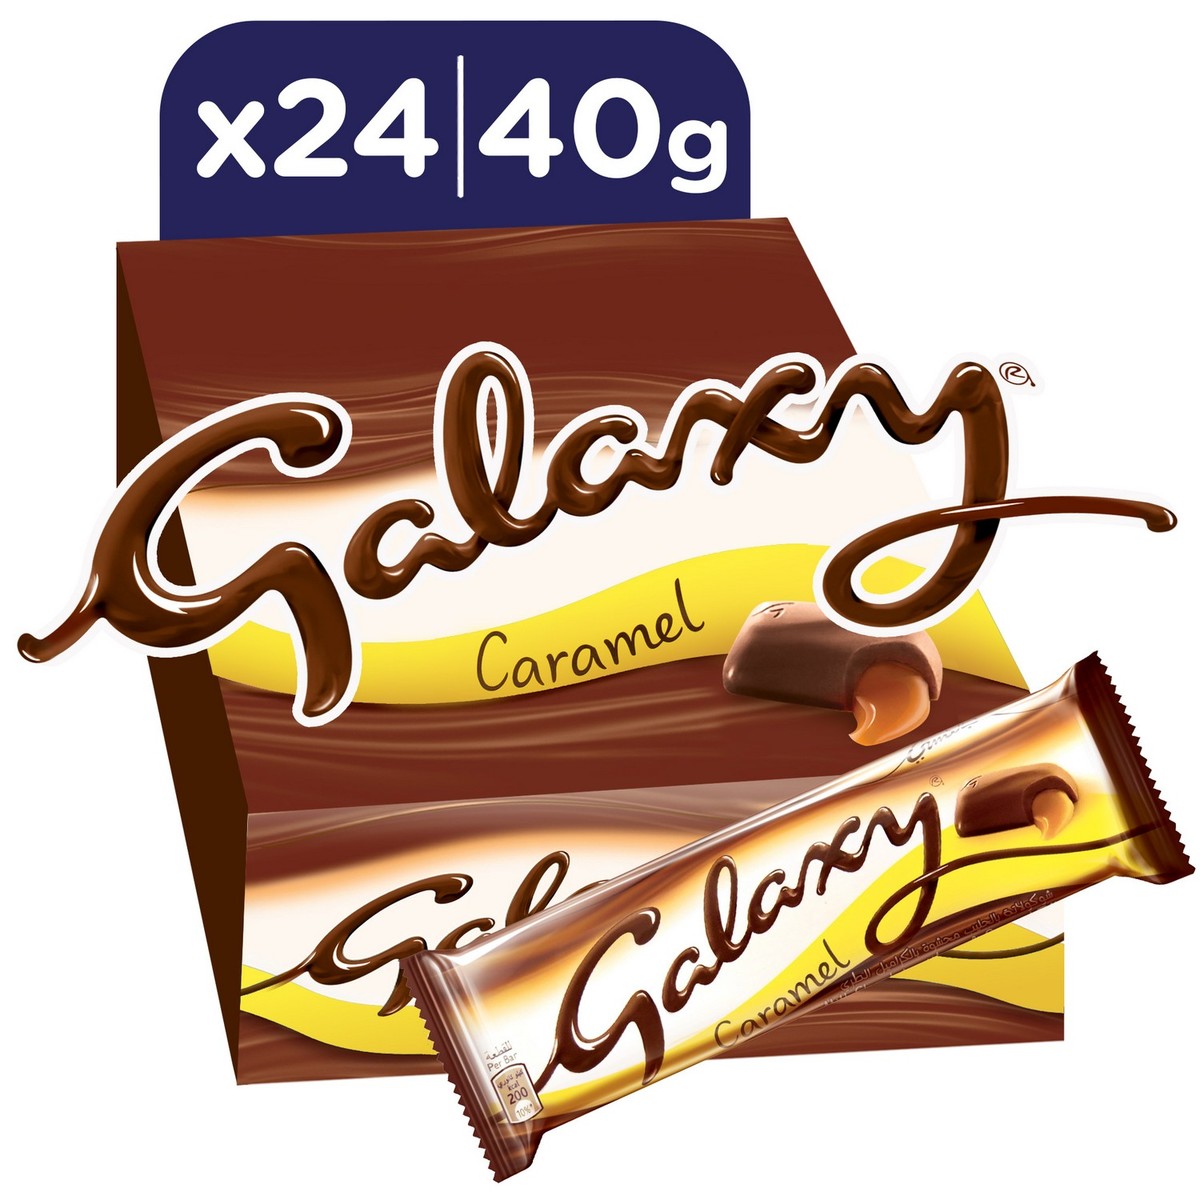 Galaxy Caramel 48 g Online at Best Price, Covrd Choco.Bars&Tab